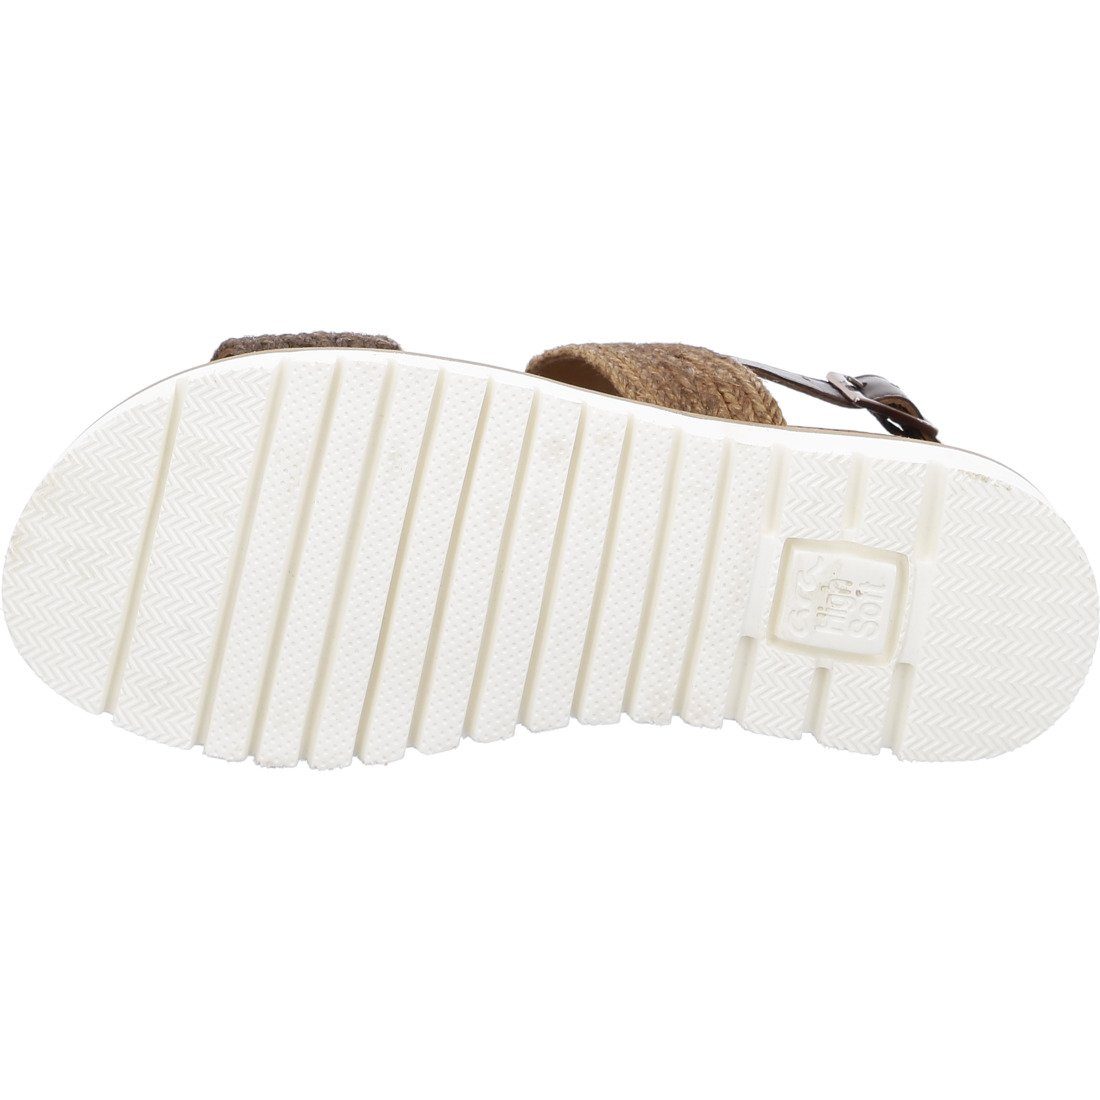 Ara Ara Schuhe, Kent-Sport Materialmix - Sandalette Sandalette